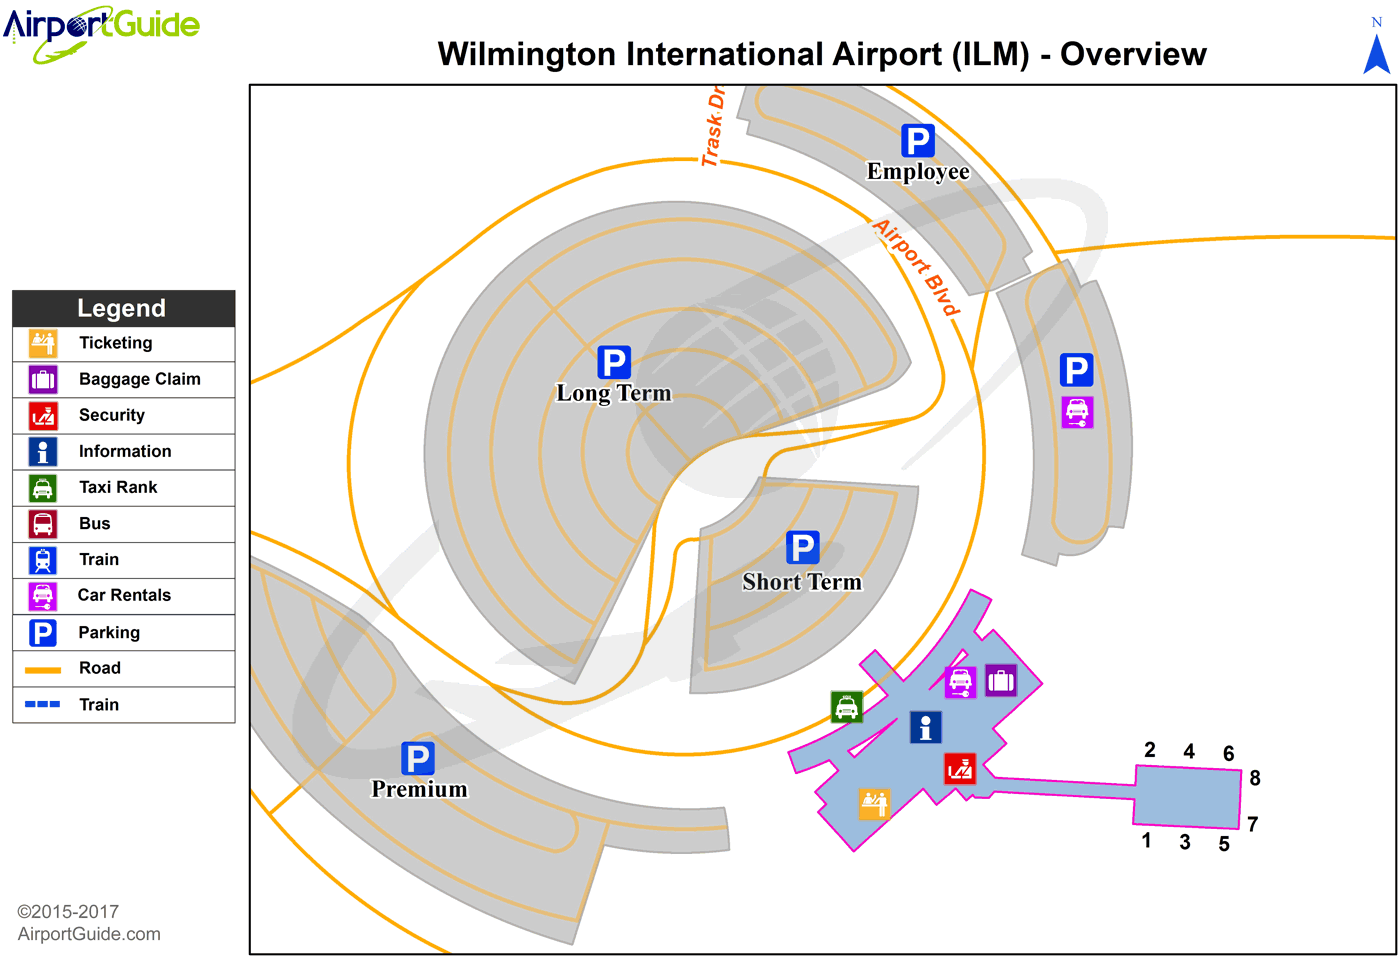 Wilmington - Harnett Regional Jetport (ILM) Airport Terminal Map - Overview